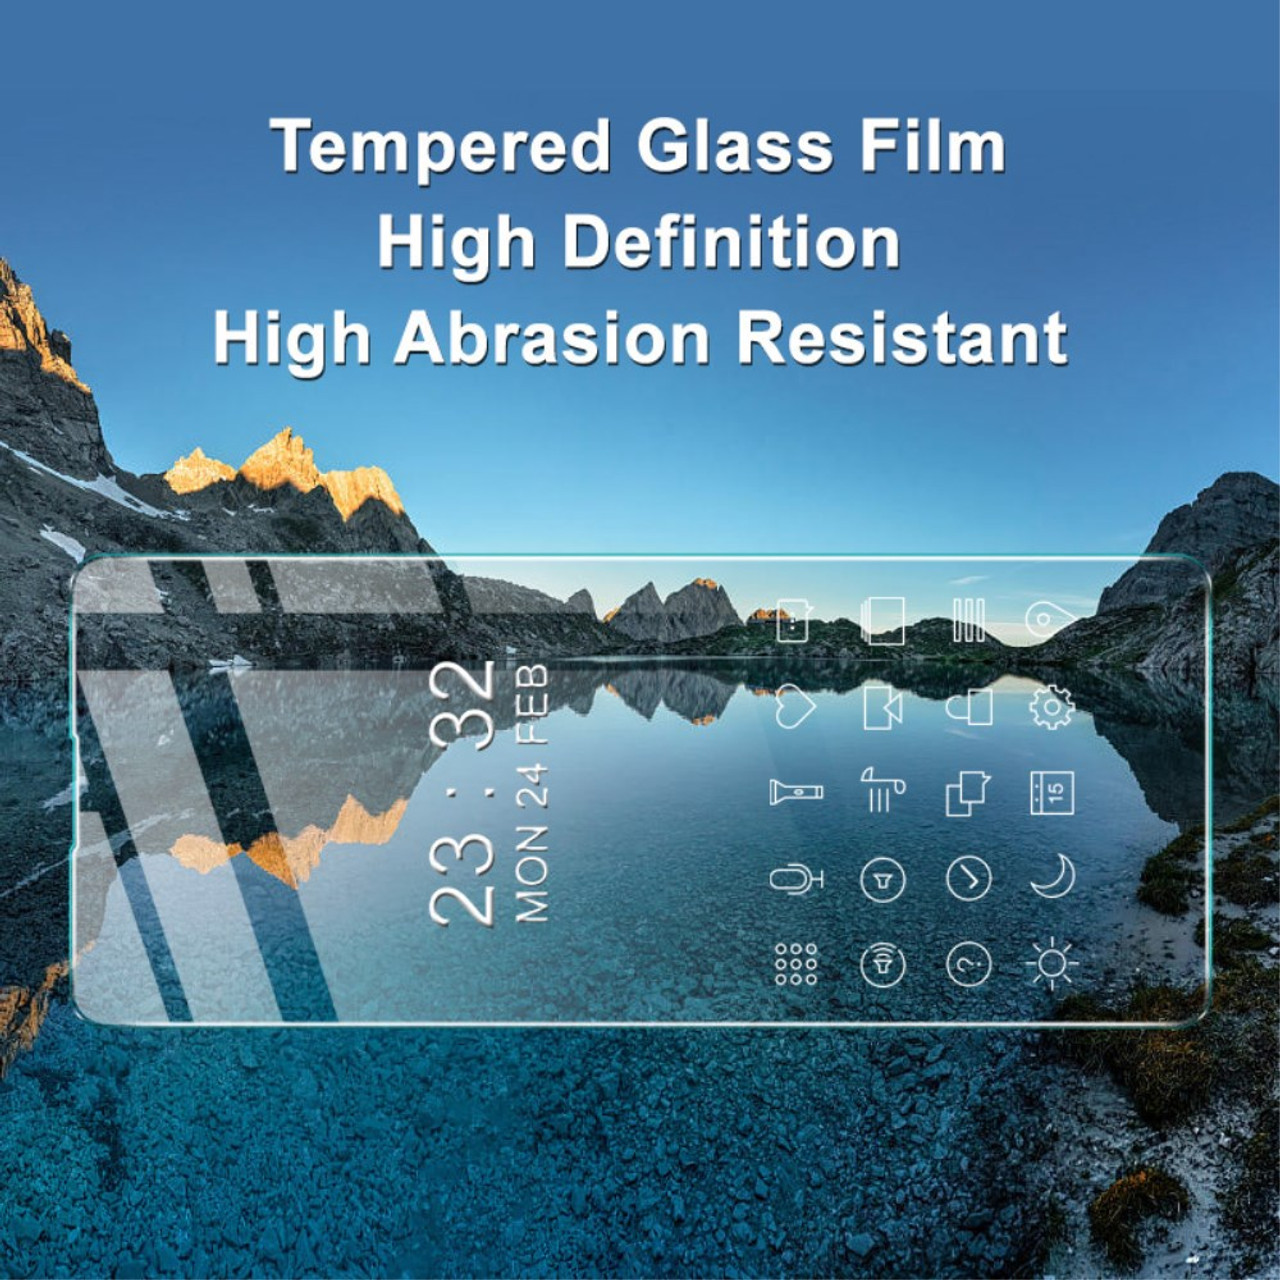 Sony Xperia 10 V Glass Screen Protector - Imak Tempered Glass Full